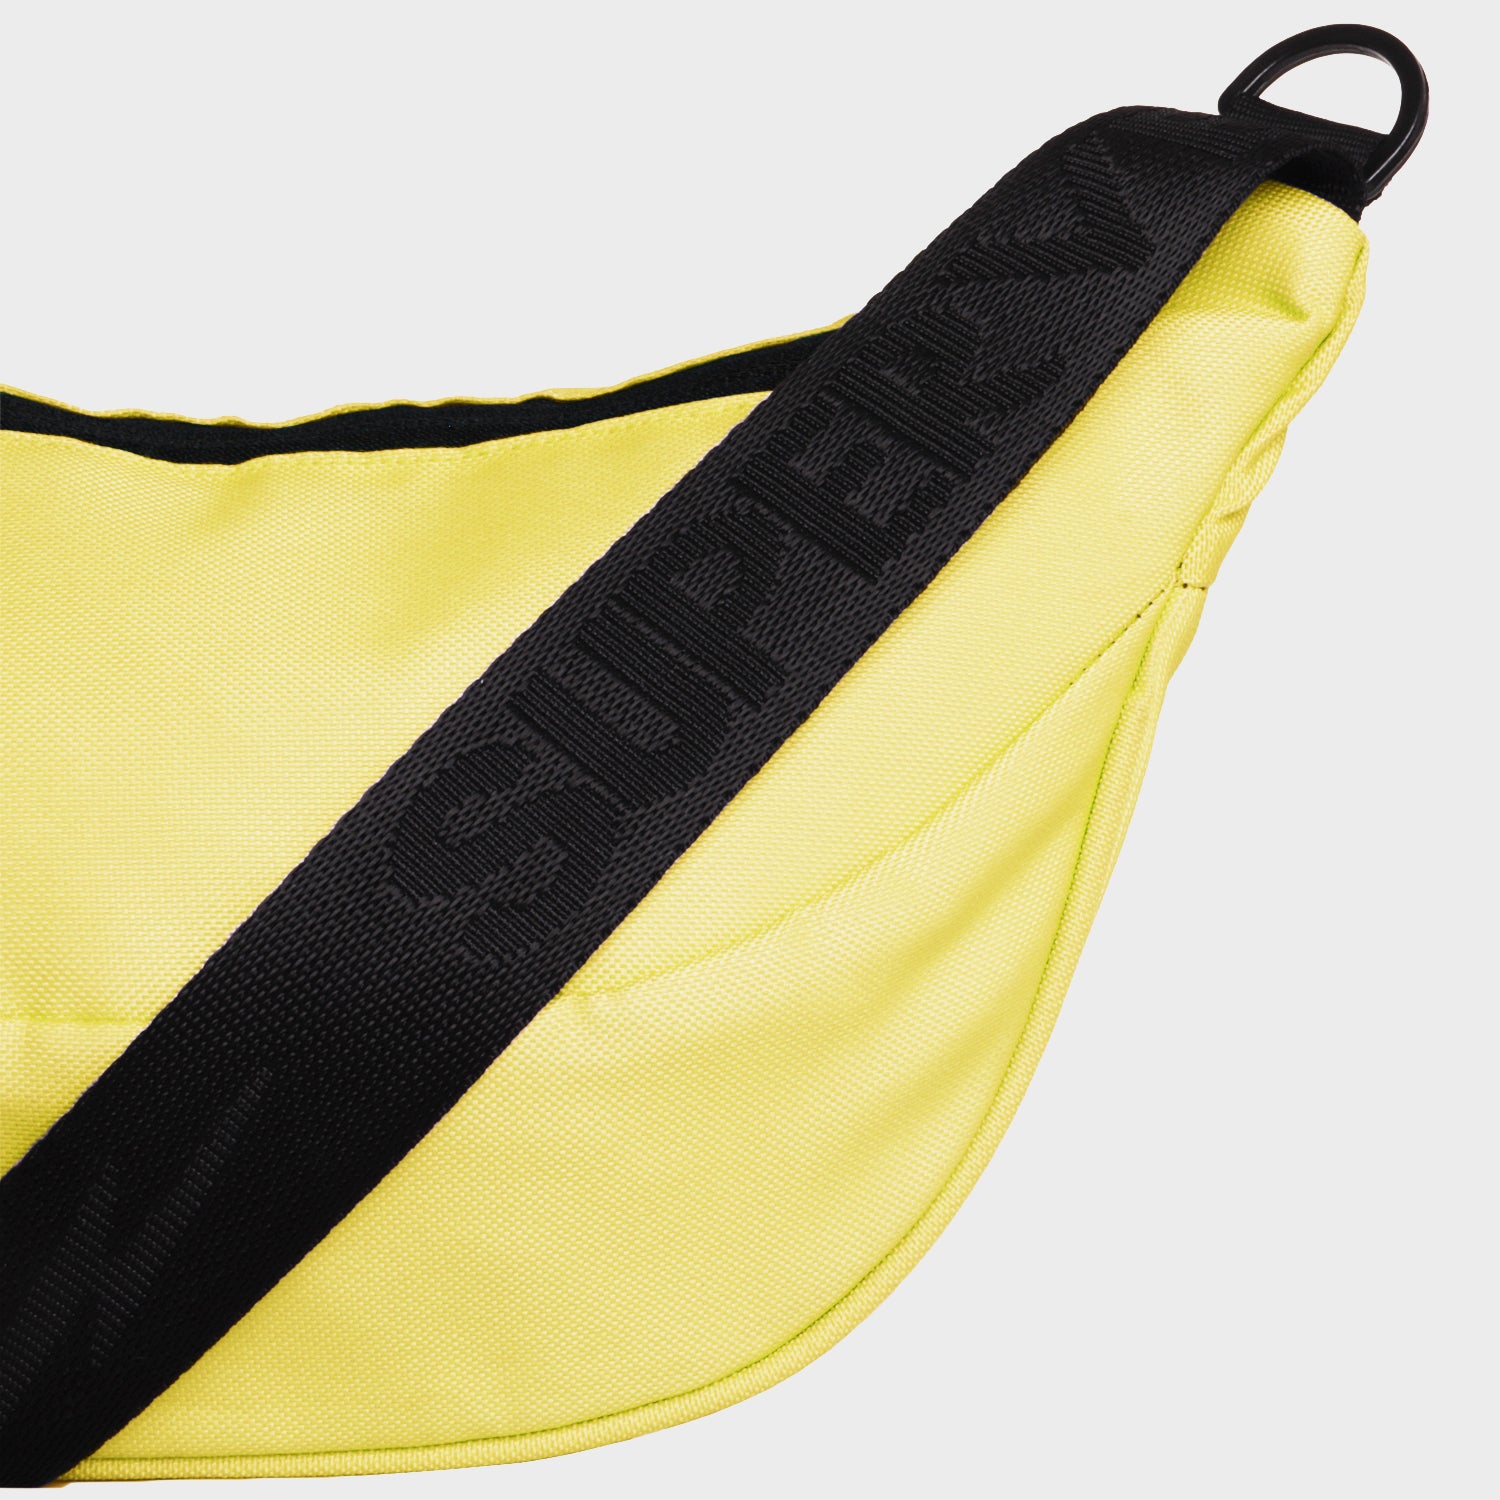 Supervek Crossbody Slinger - Canary Yellow - Urban Functional Fanny Hip Bag for Everyday Essentials - Belt Design